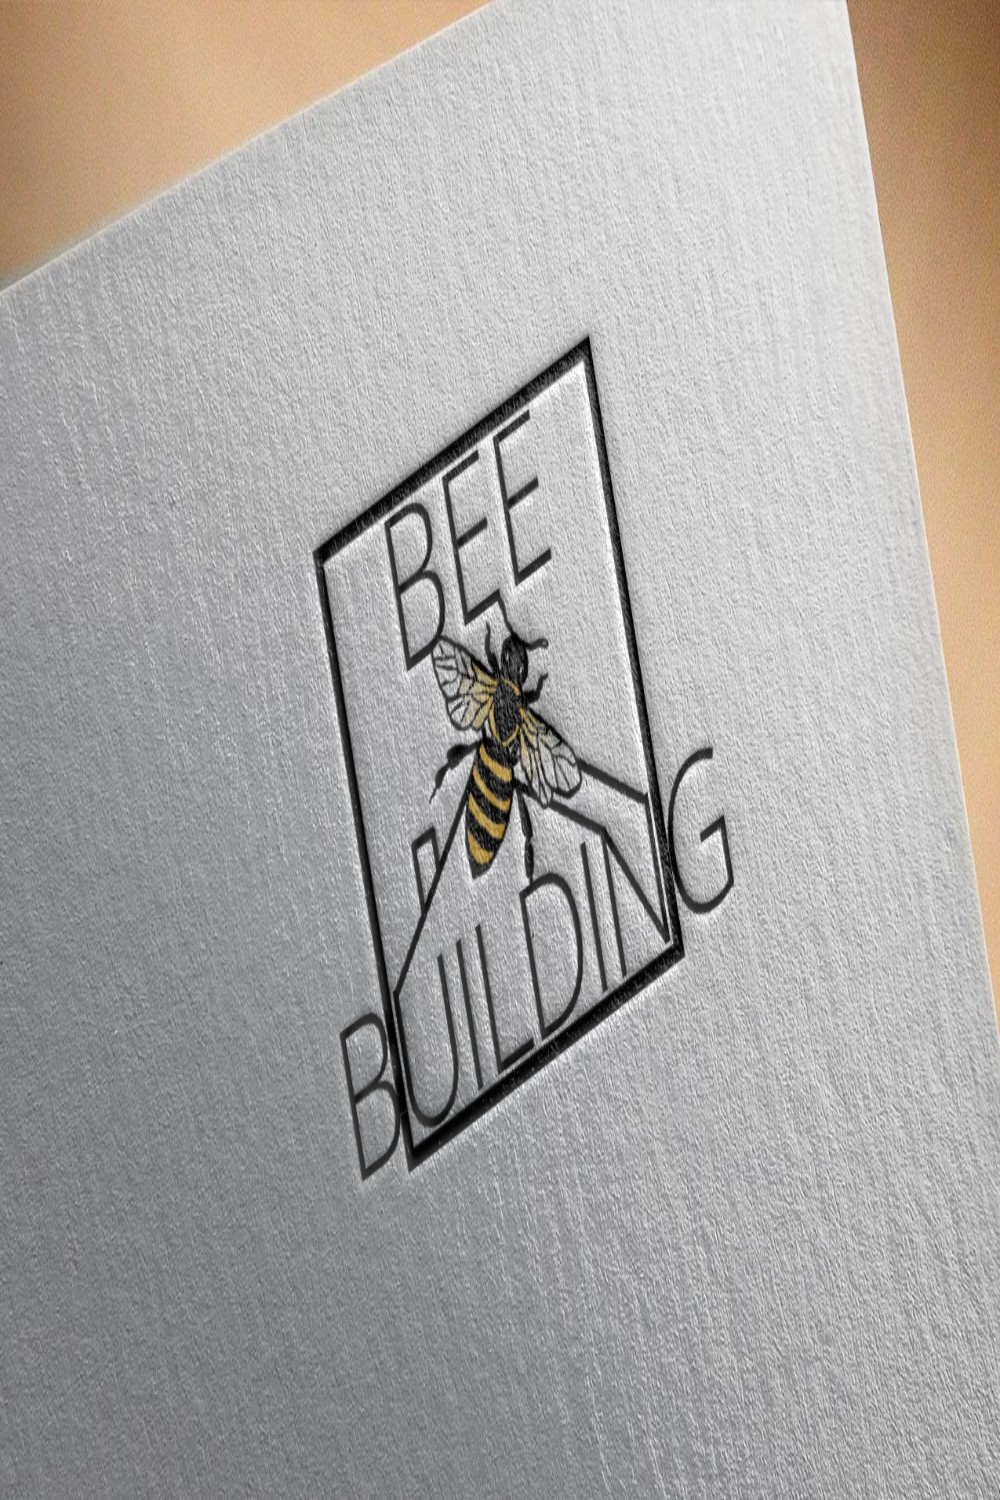 Bee Building Logo Design Pinterest image.